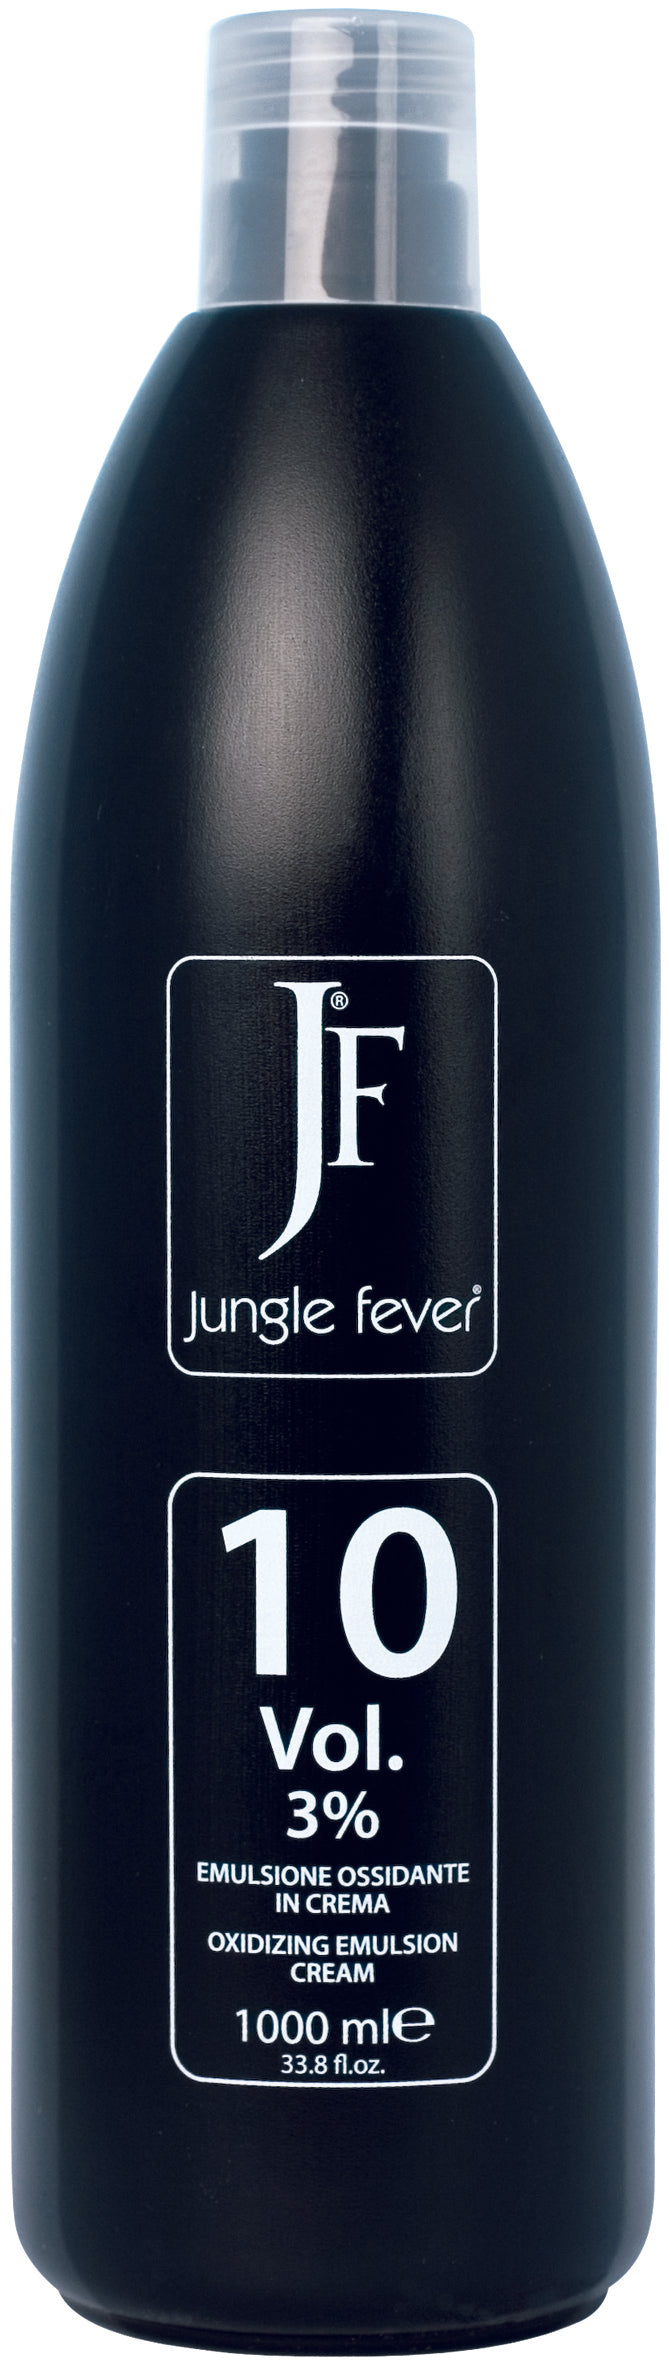 Jungle Fever Oxidizing Emulsion Cream 1000ml - Vol. 10 (3%)